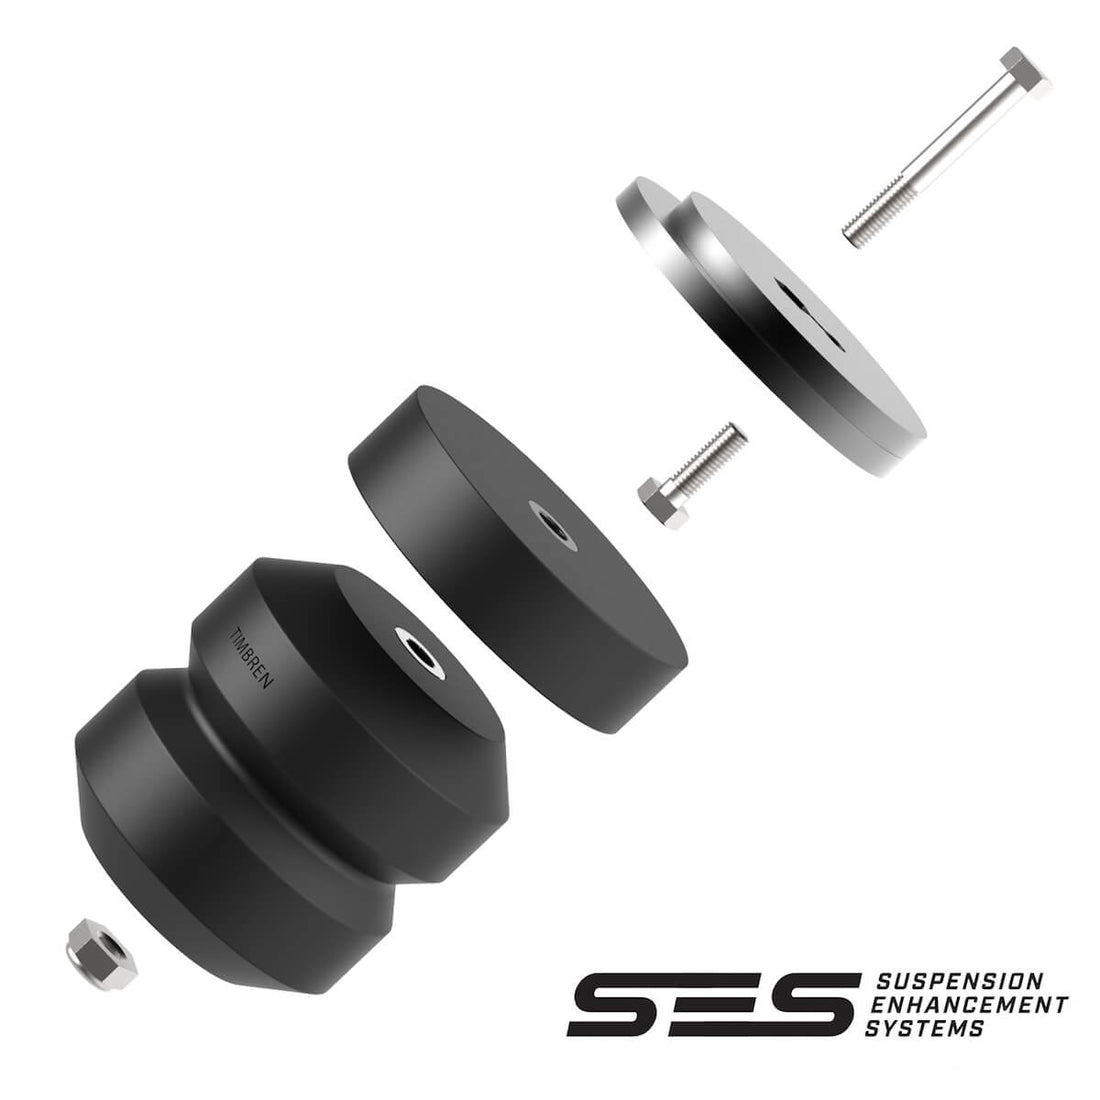 Timbren SES Suspension Enhancement System SKU# FF350SDC - Front Kit